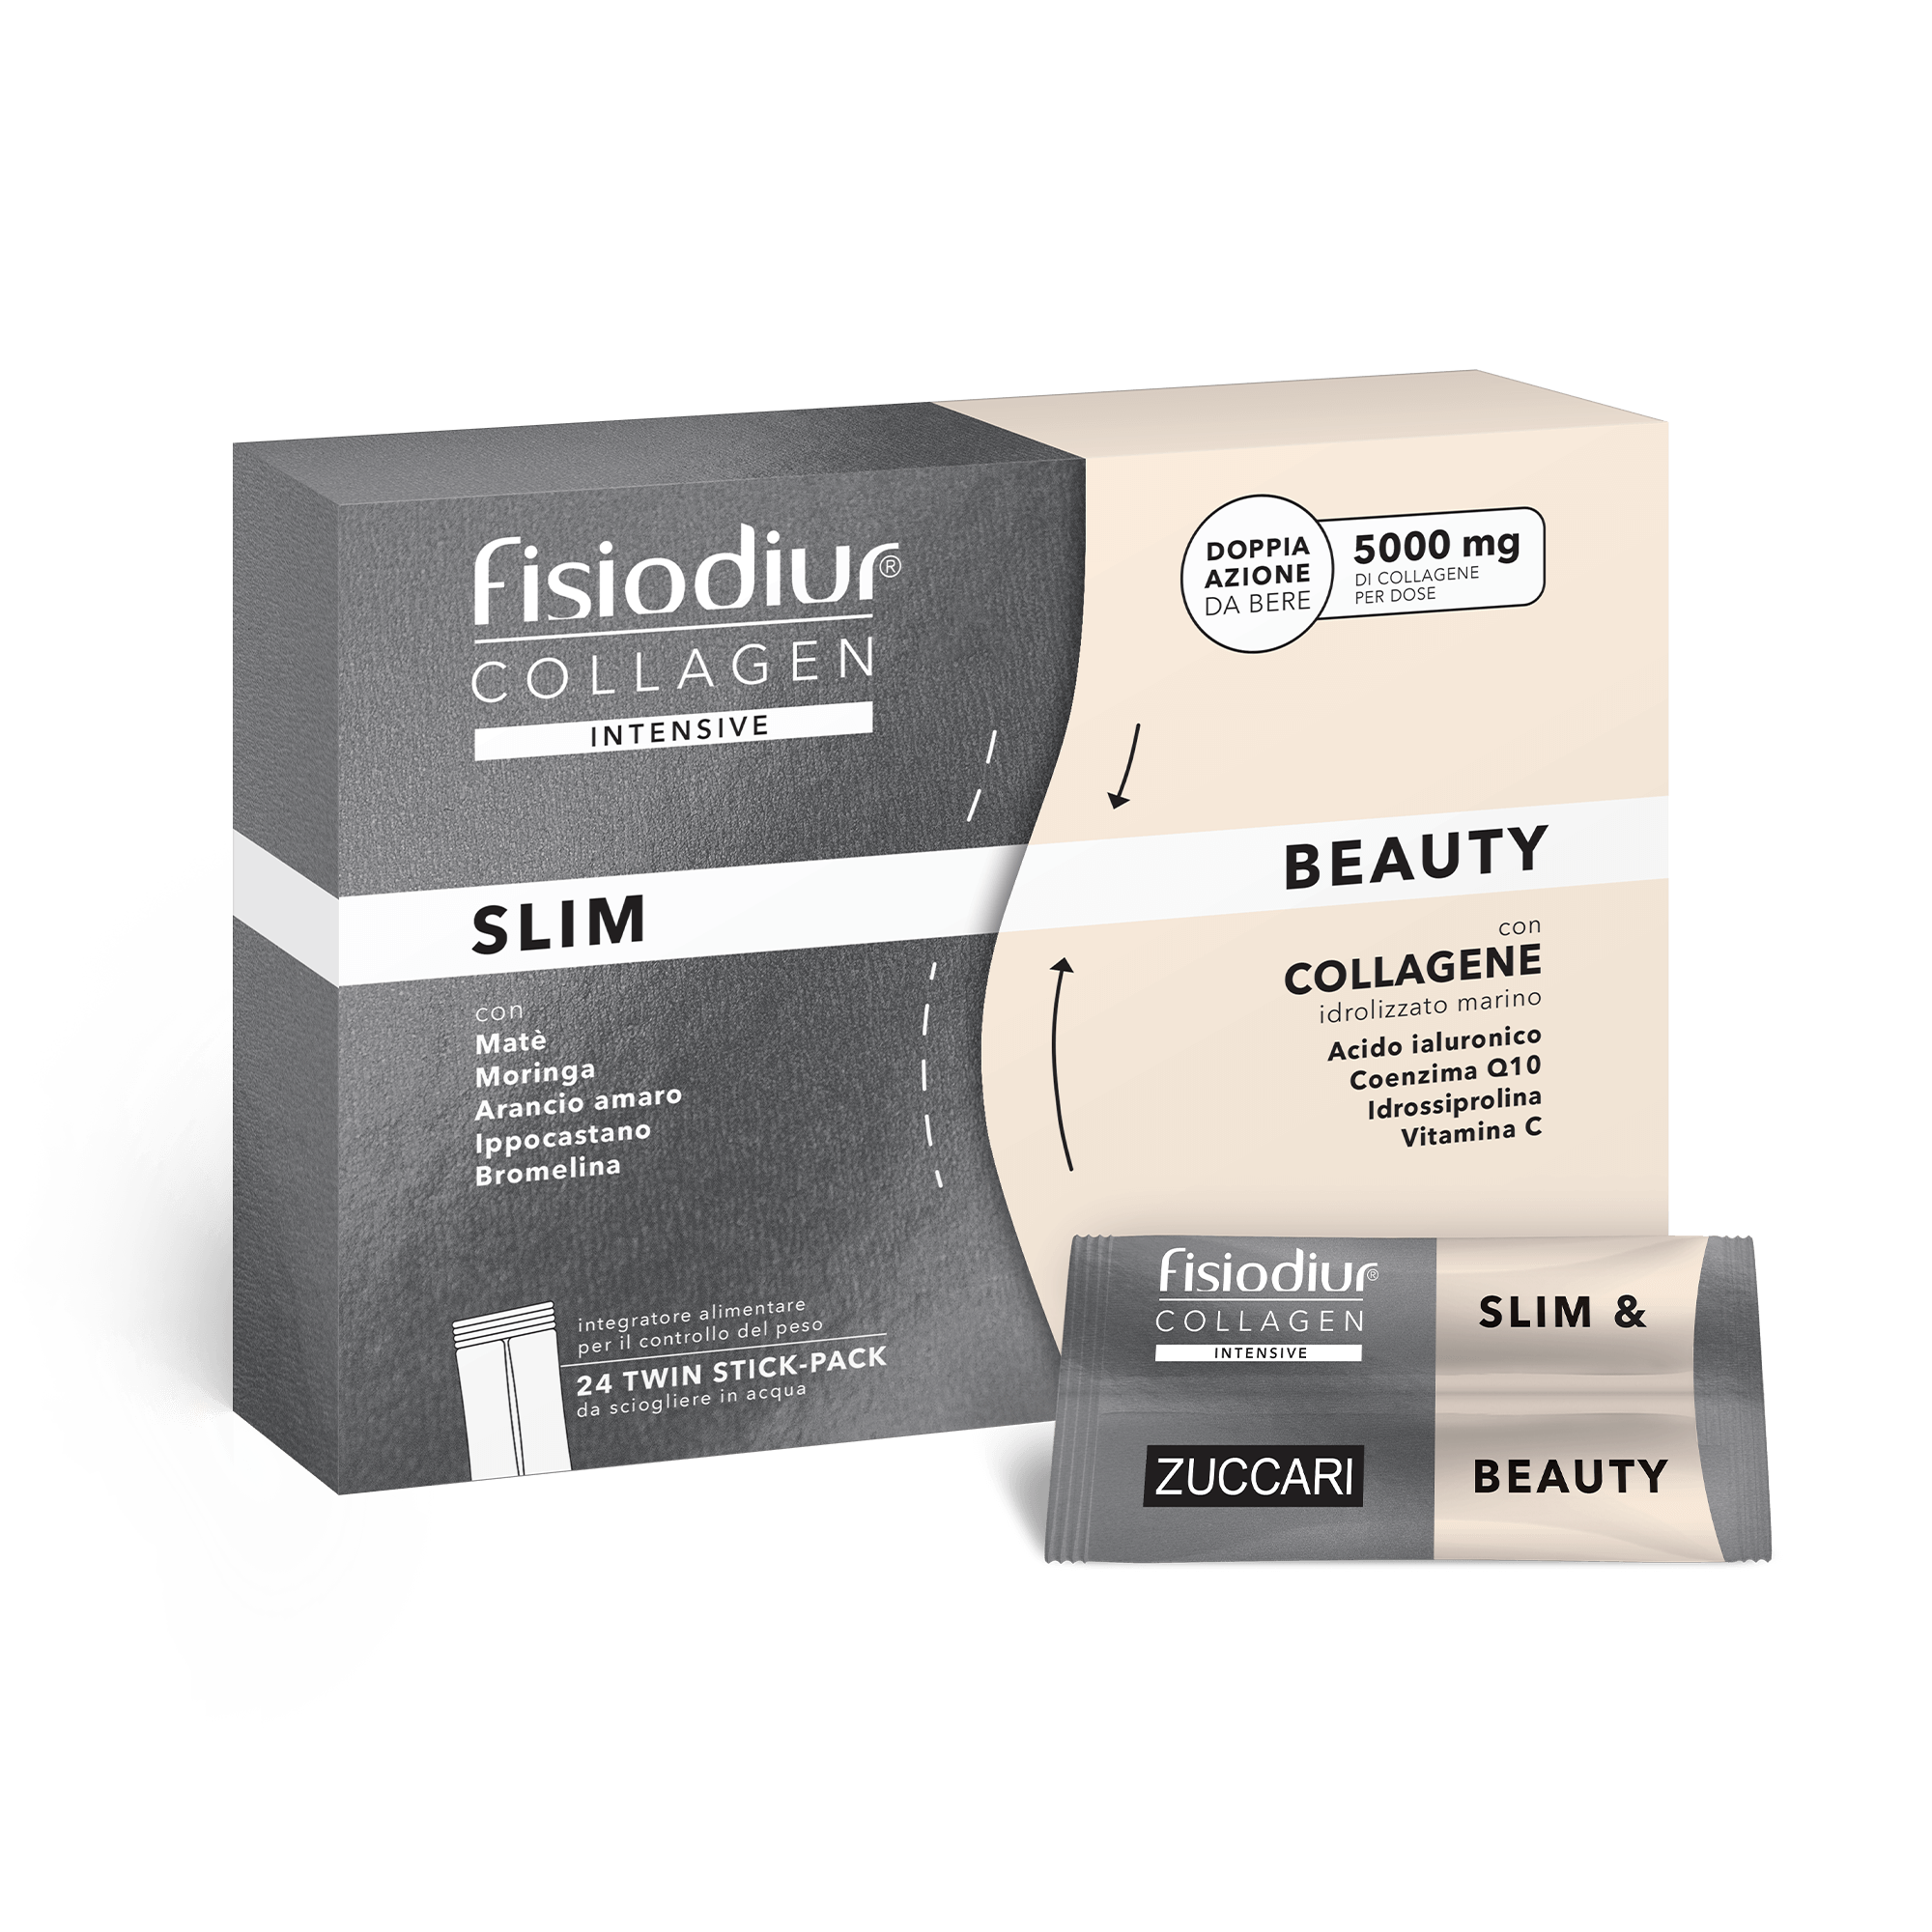 Fisiodiur Collagen Intensive Slim & Beauty